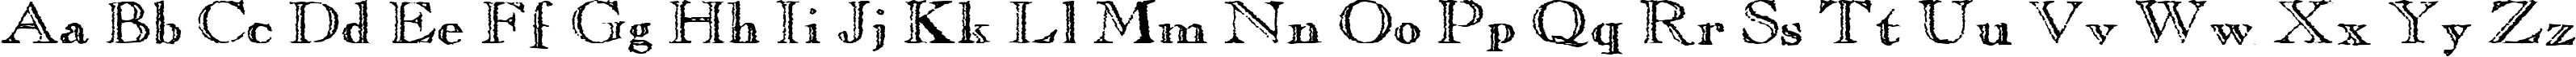 Пример написания английского алфавита шрифтом Old Copperfield